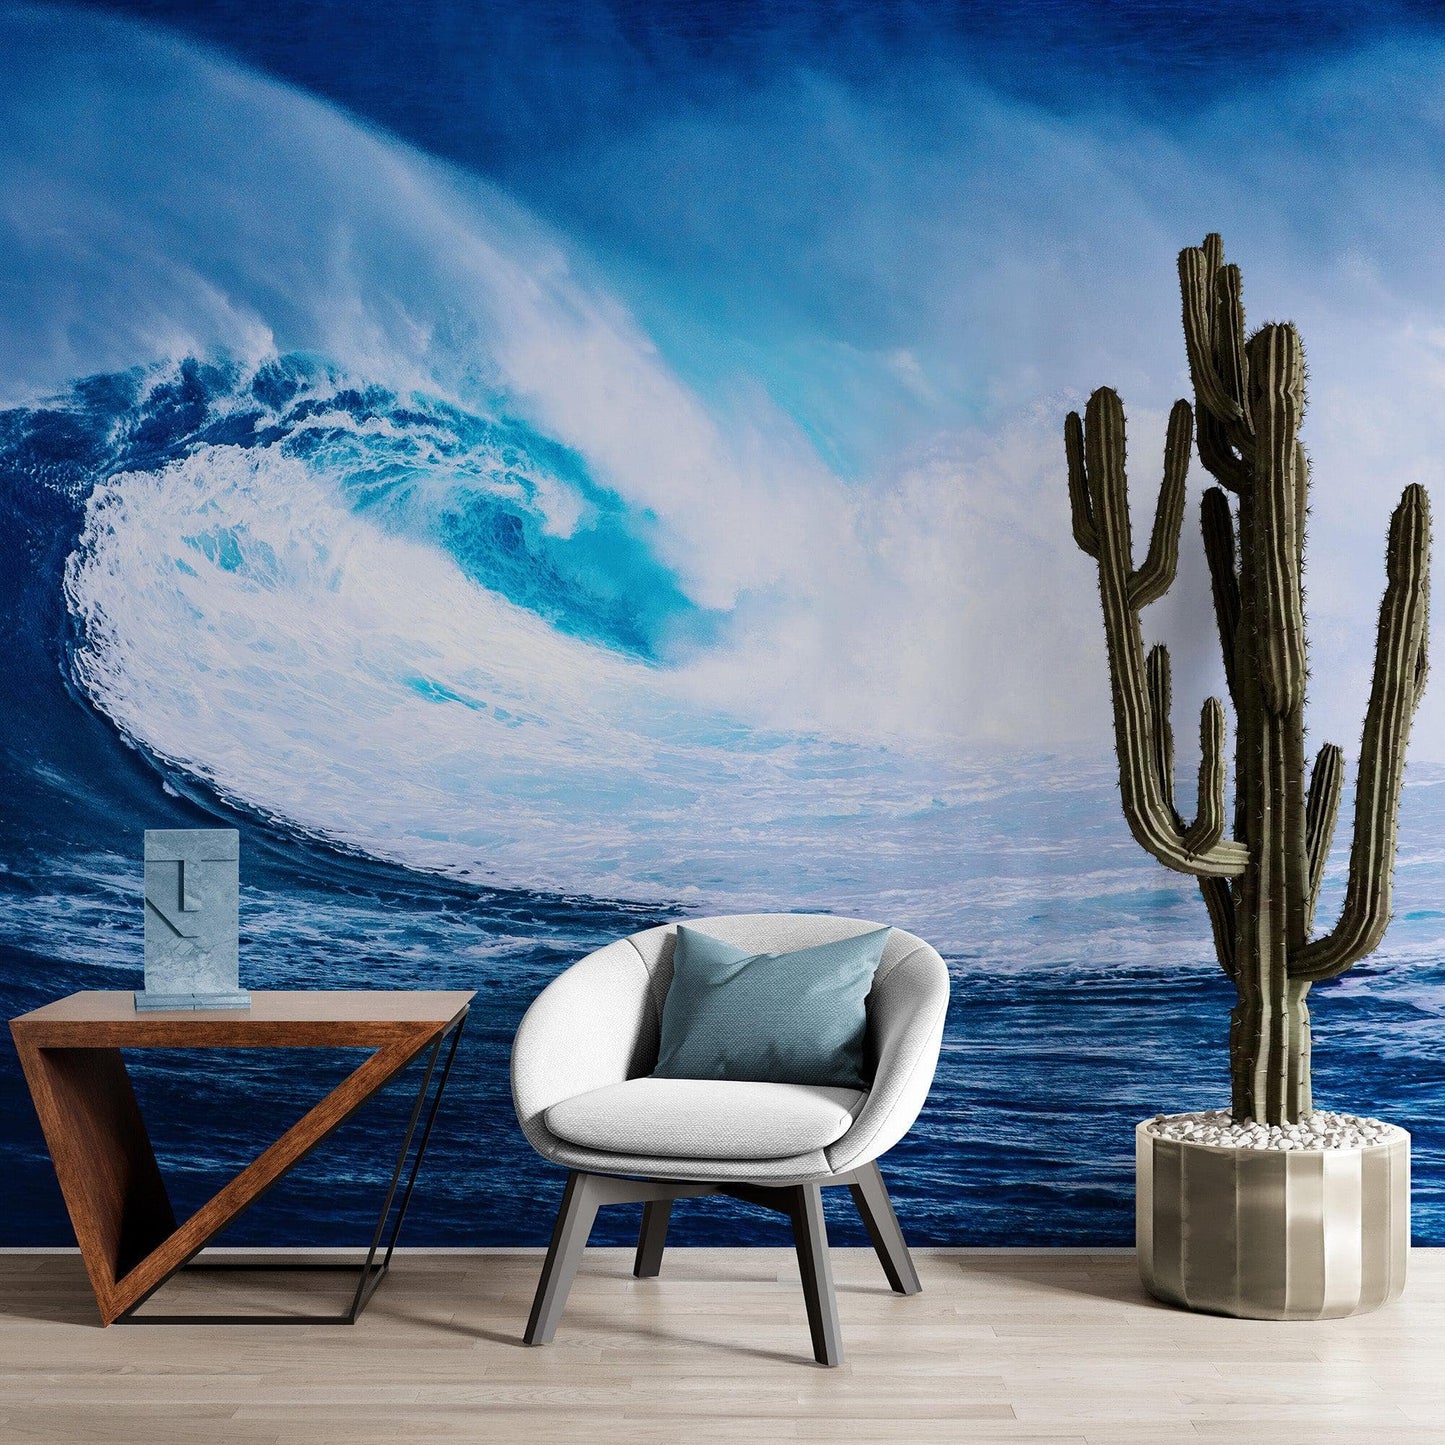 Big Wave Wallpaper. Surf Ocean Wave Wall Mural. #6670